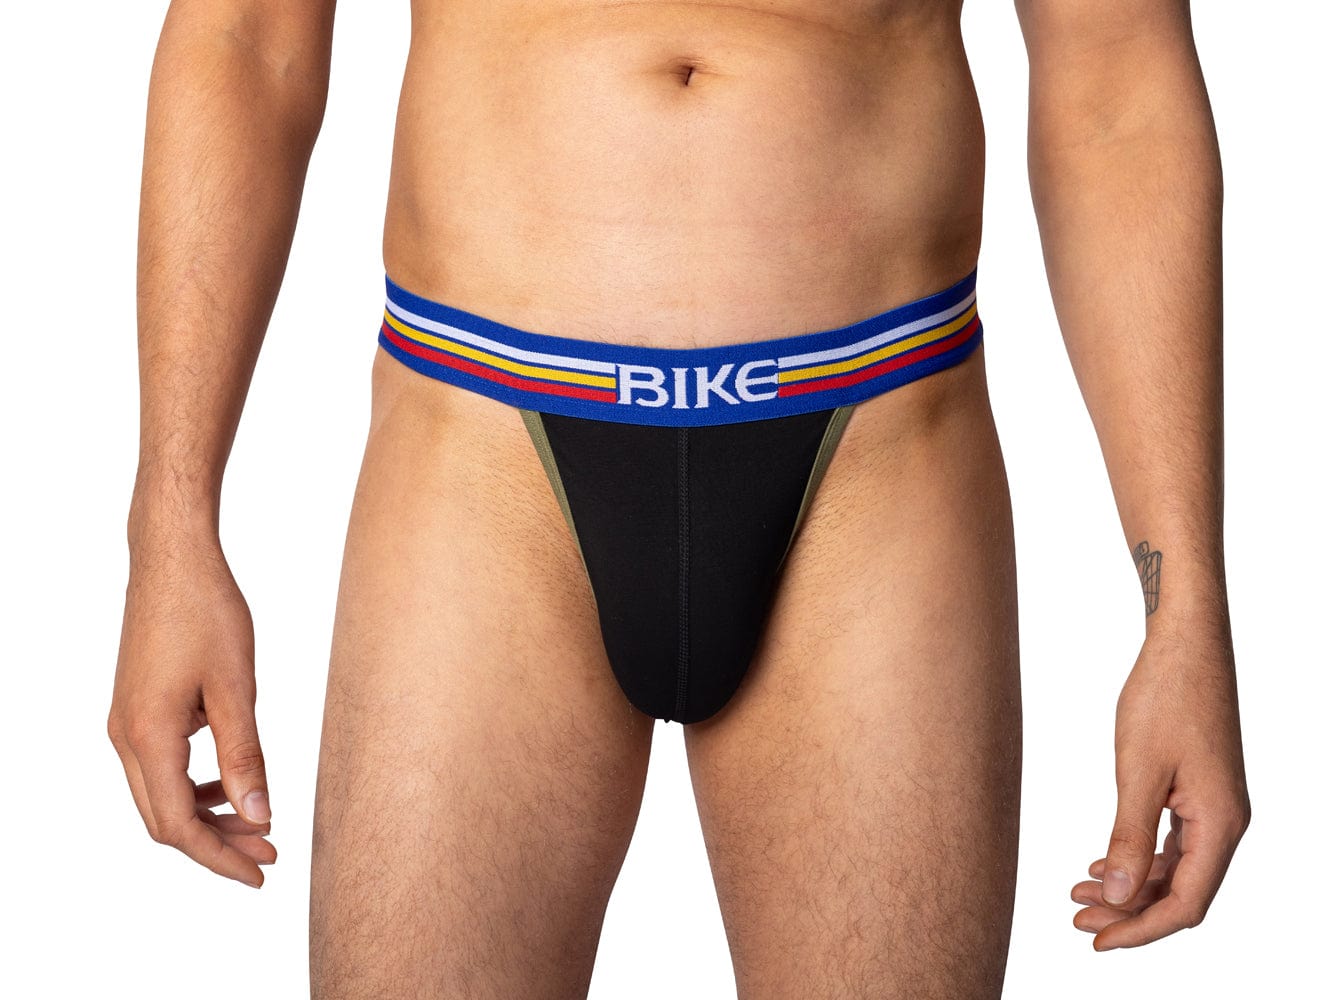 Black Bike Athletic underwear jock briefs